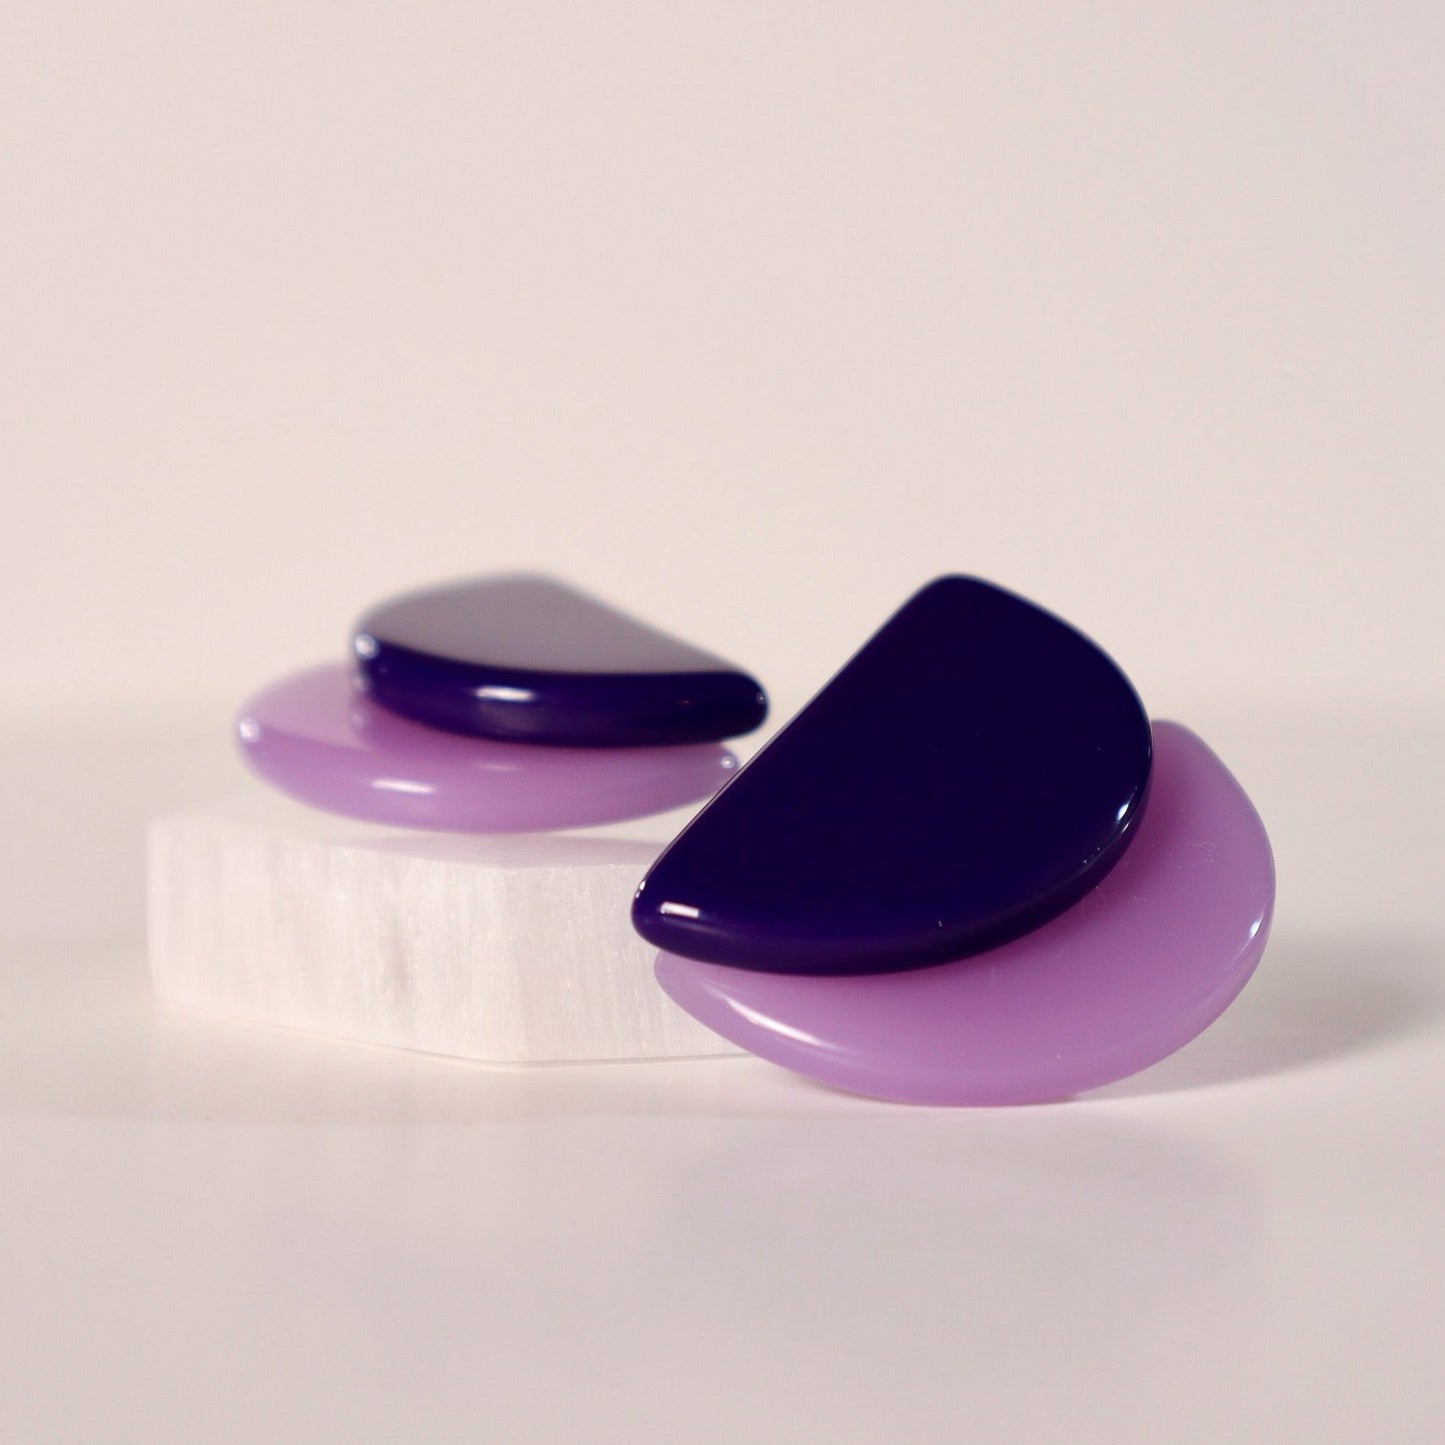 Semi Circles Resin Earrings in Lavender & Purple